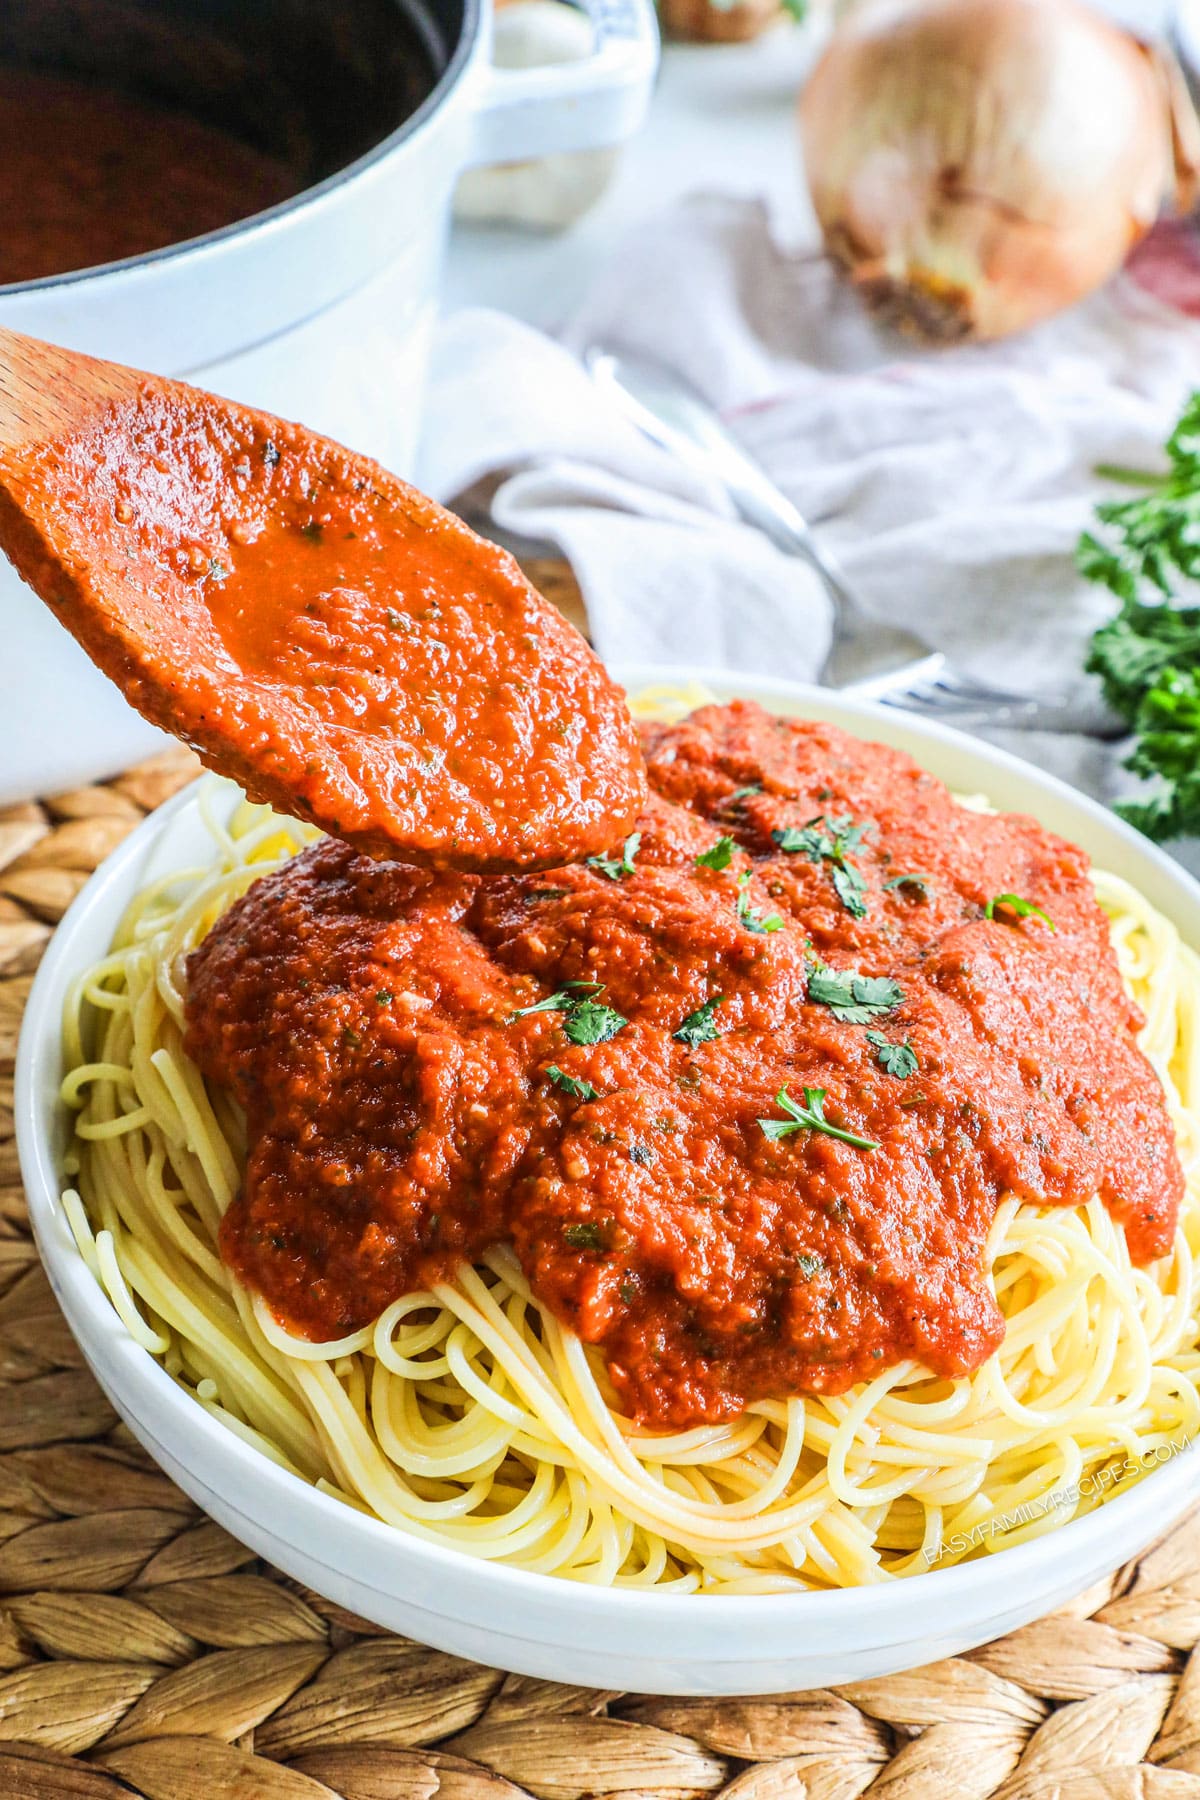 Spooning marinara sauce over spaghetti noodles